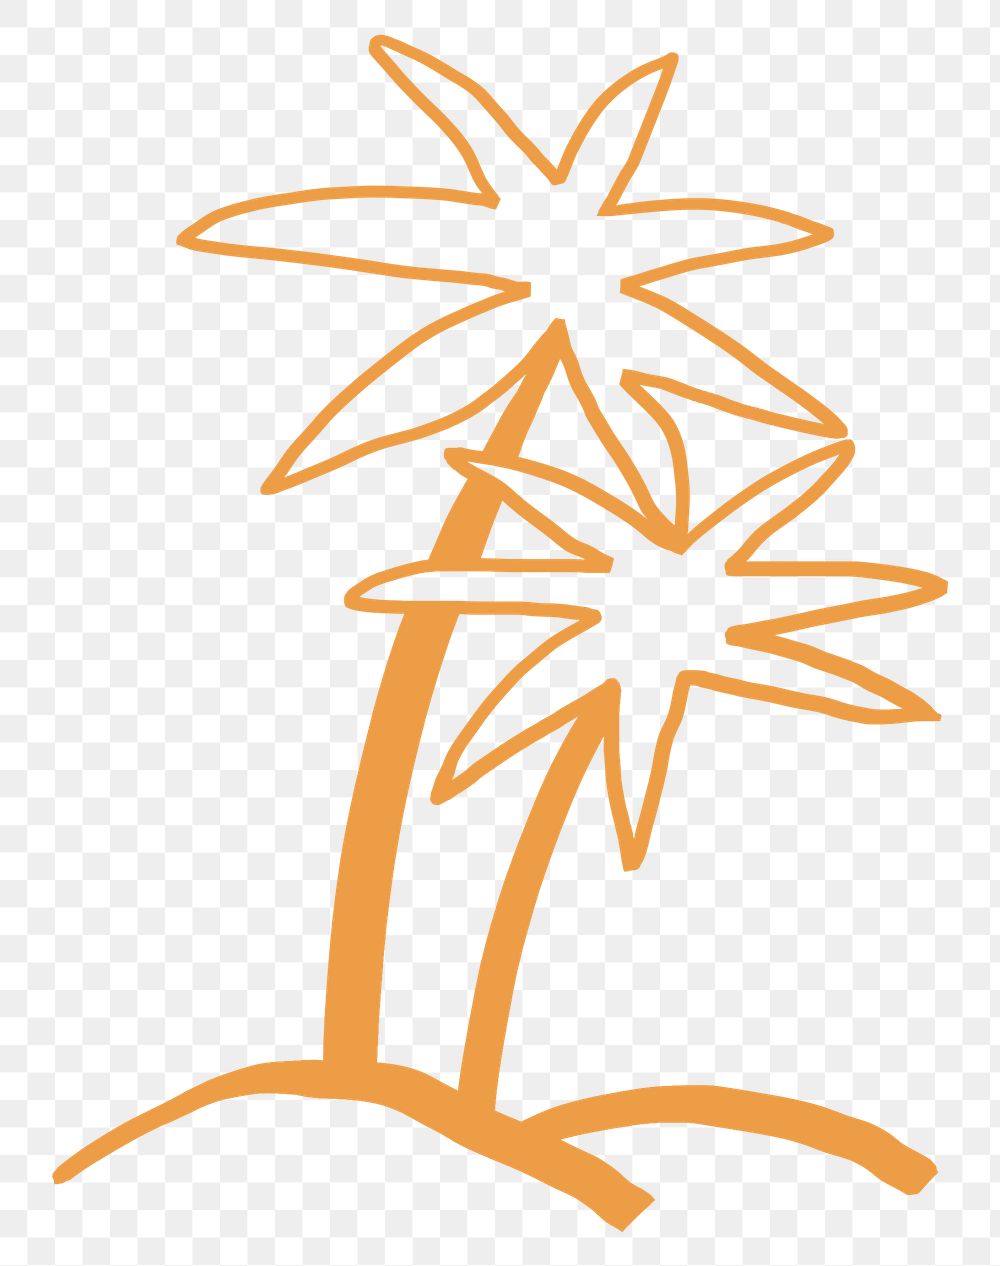 Png palm tree summer sticker doodle in orange